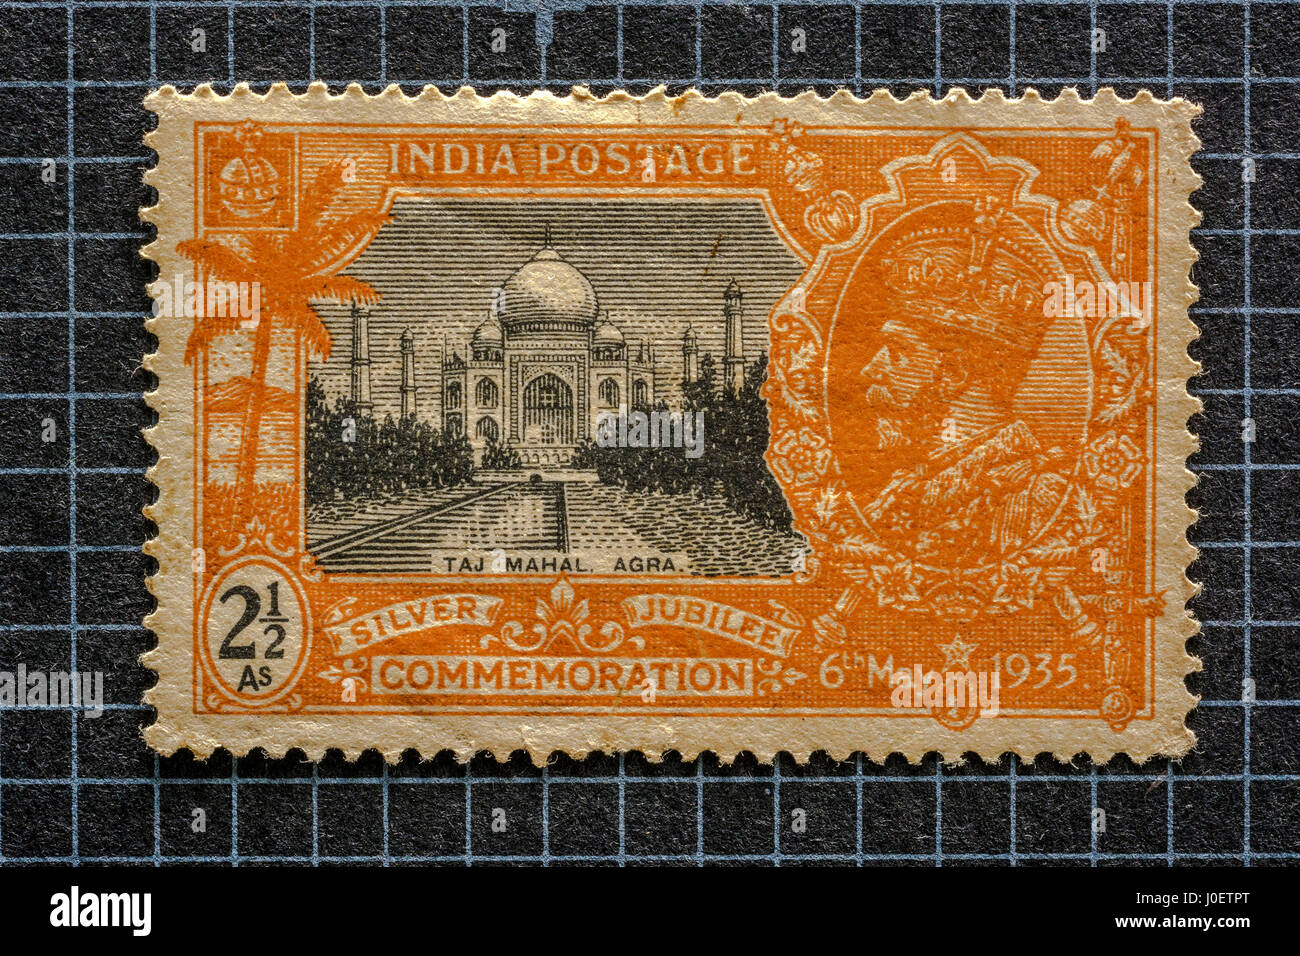 Silver Jubilee Gedenkfeier 1935 Taj Mahal Agra, 2,5 anna Briefmarken, Indien, Asien Stockfoto